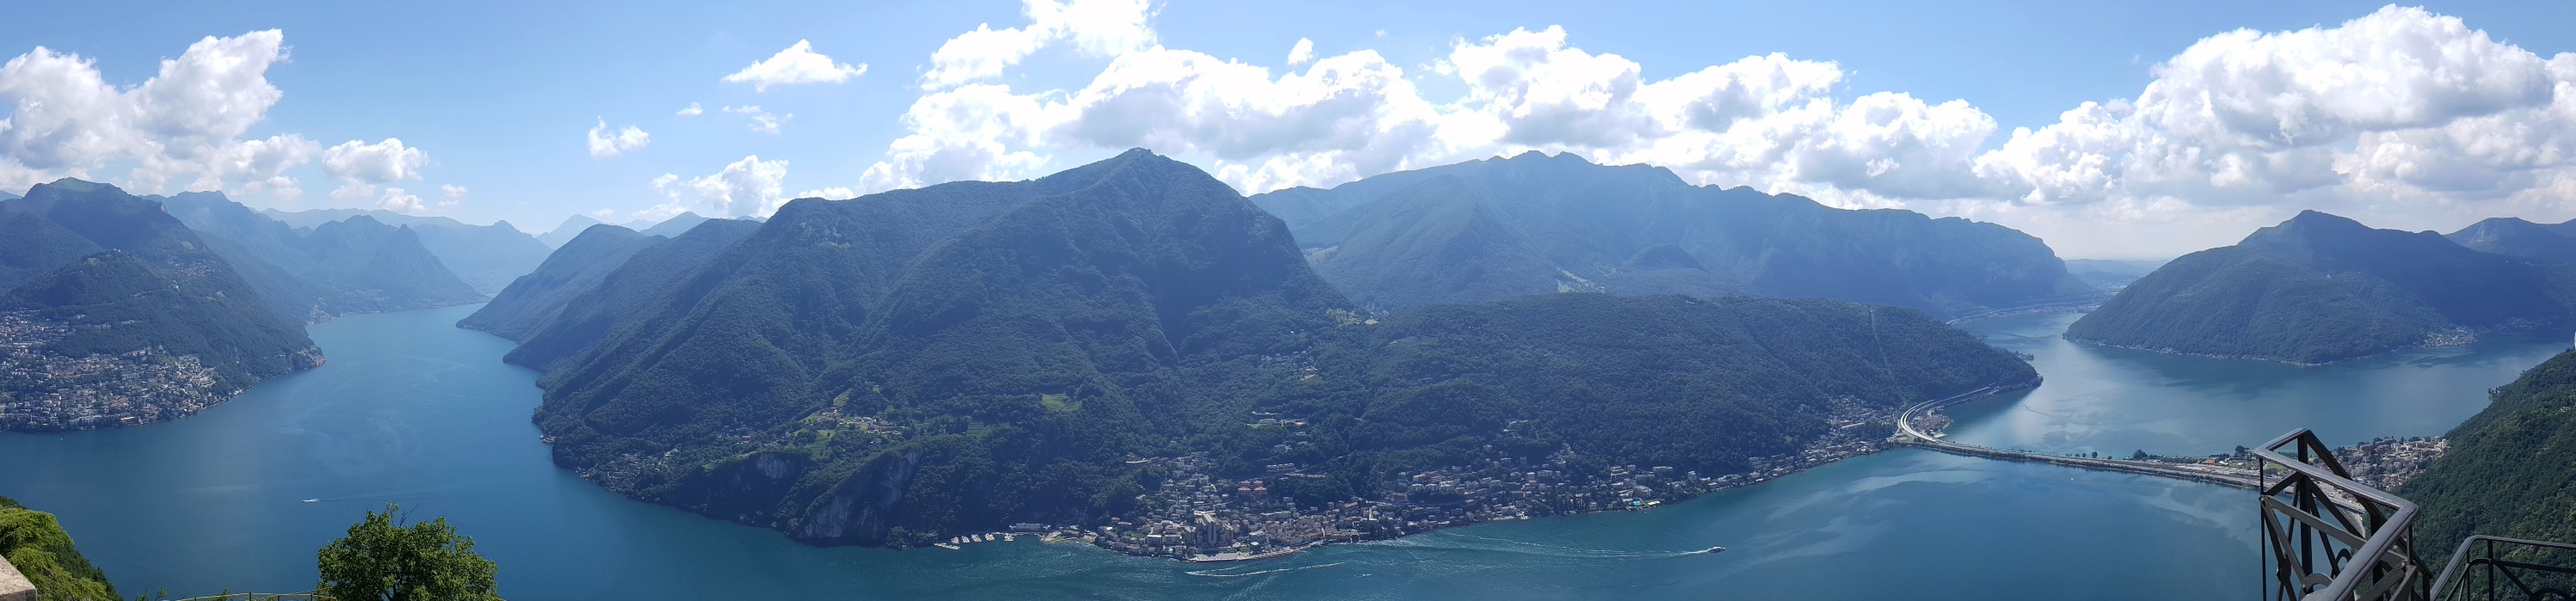 panorama of the main area of Lake Lugano from San Salvatore